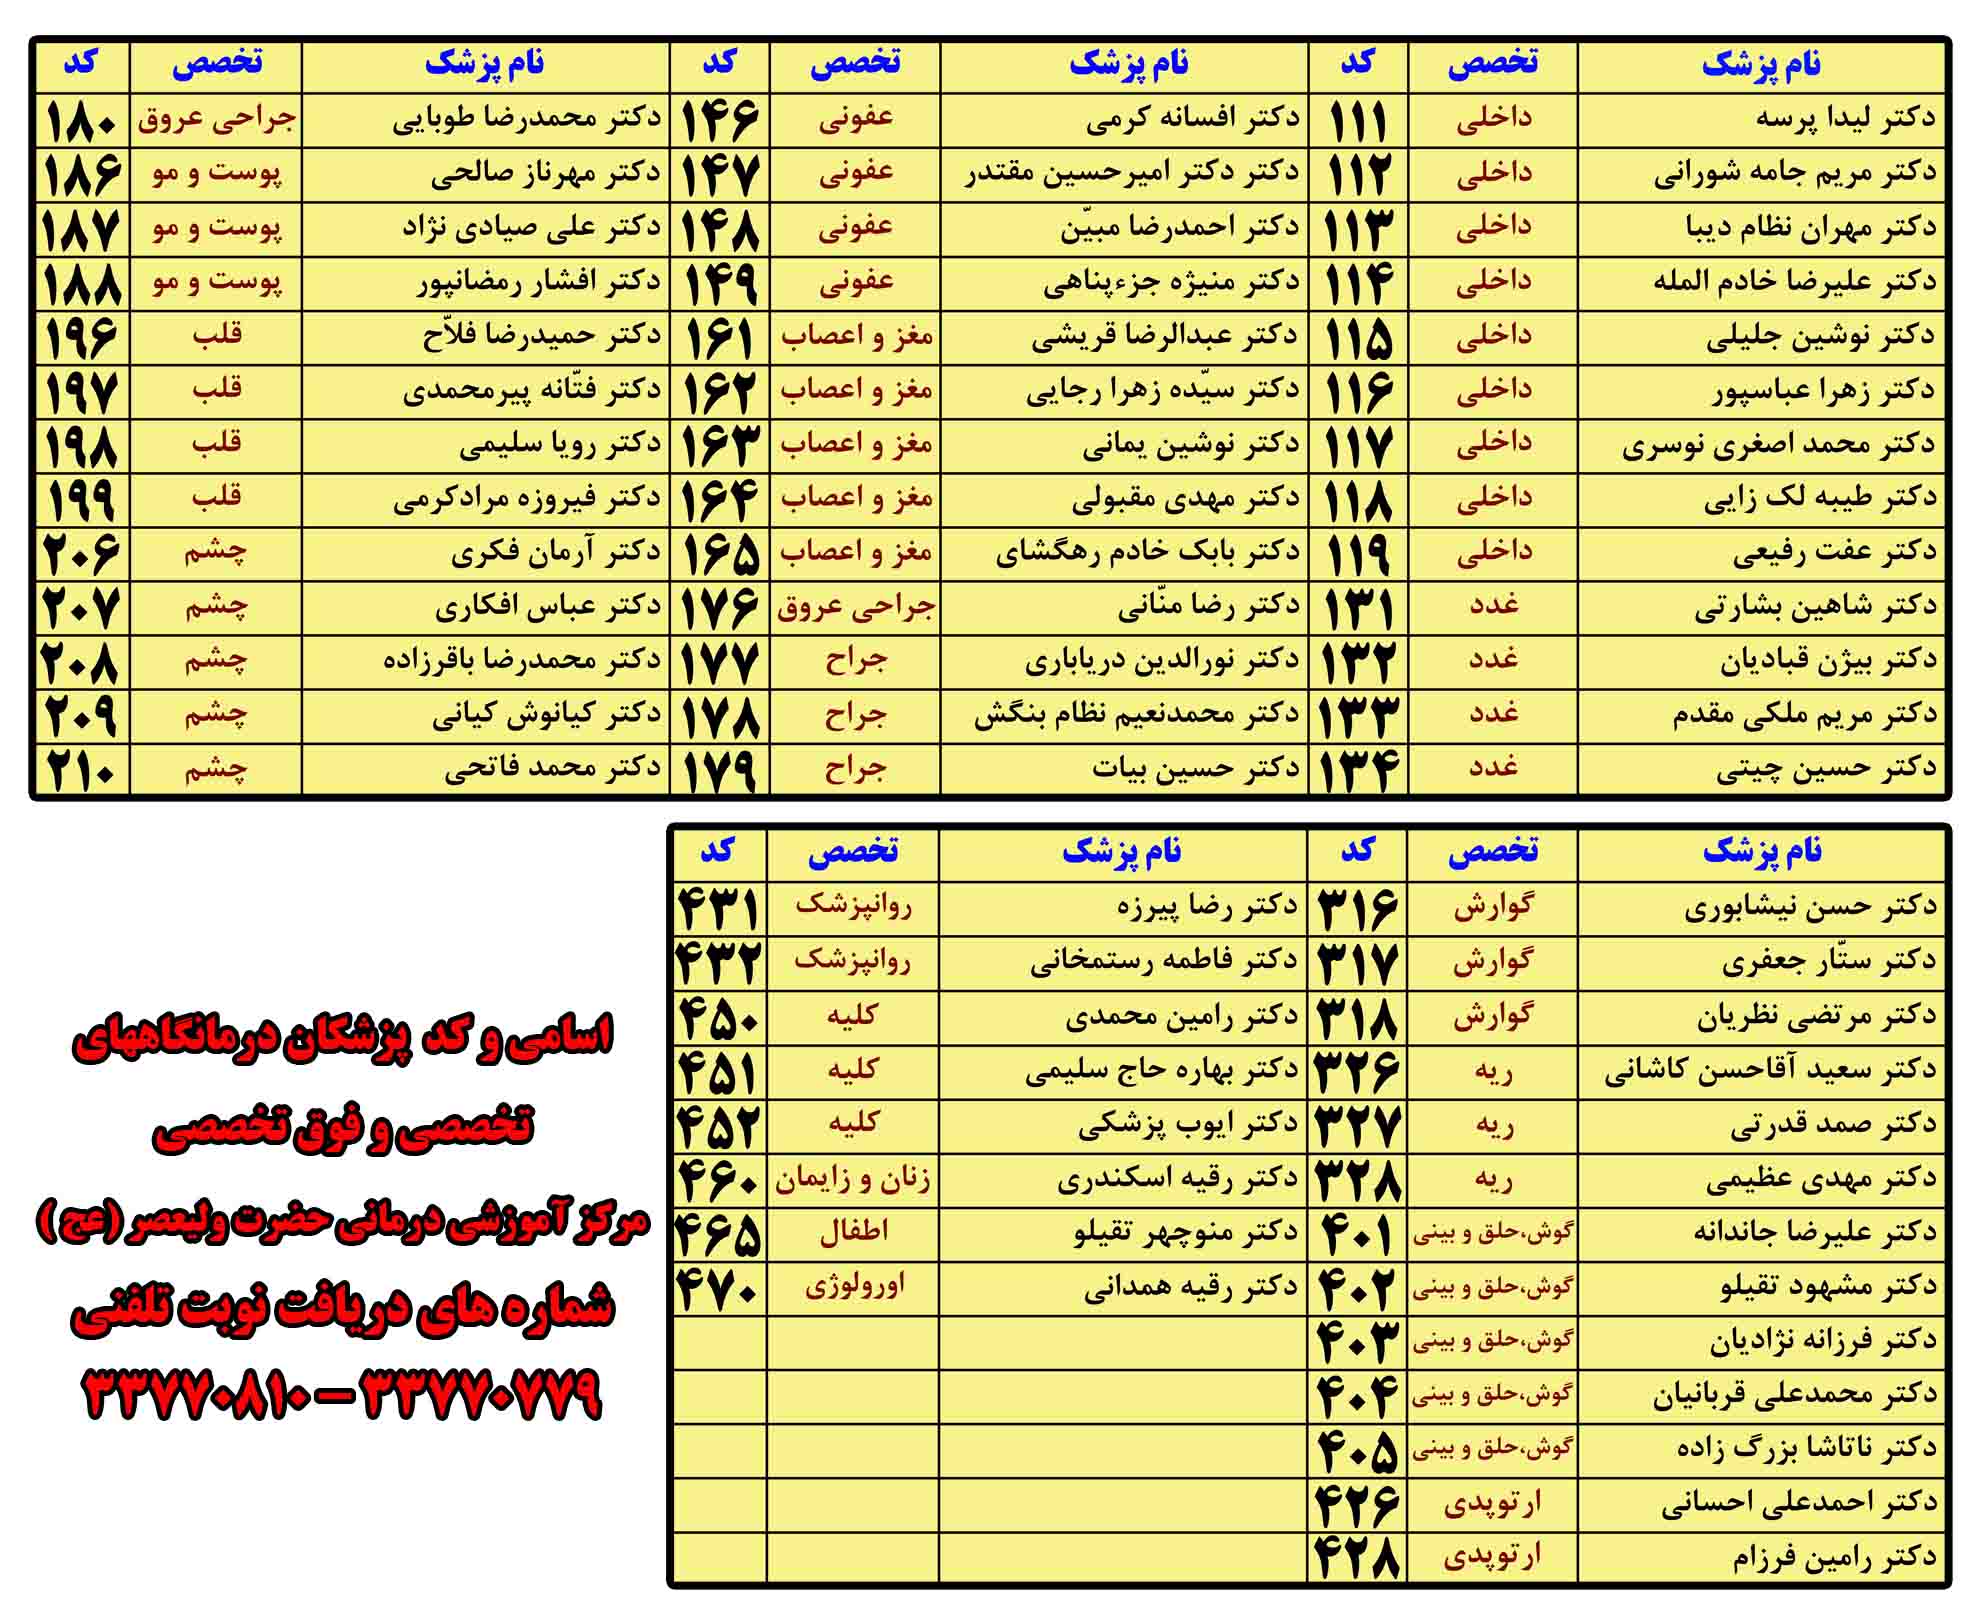 لیست پزشکان متخصص استان زنجان
